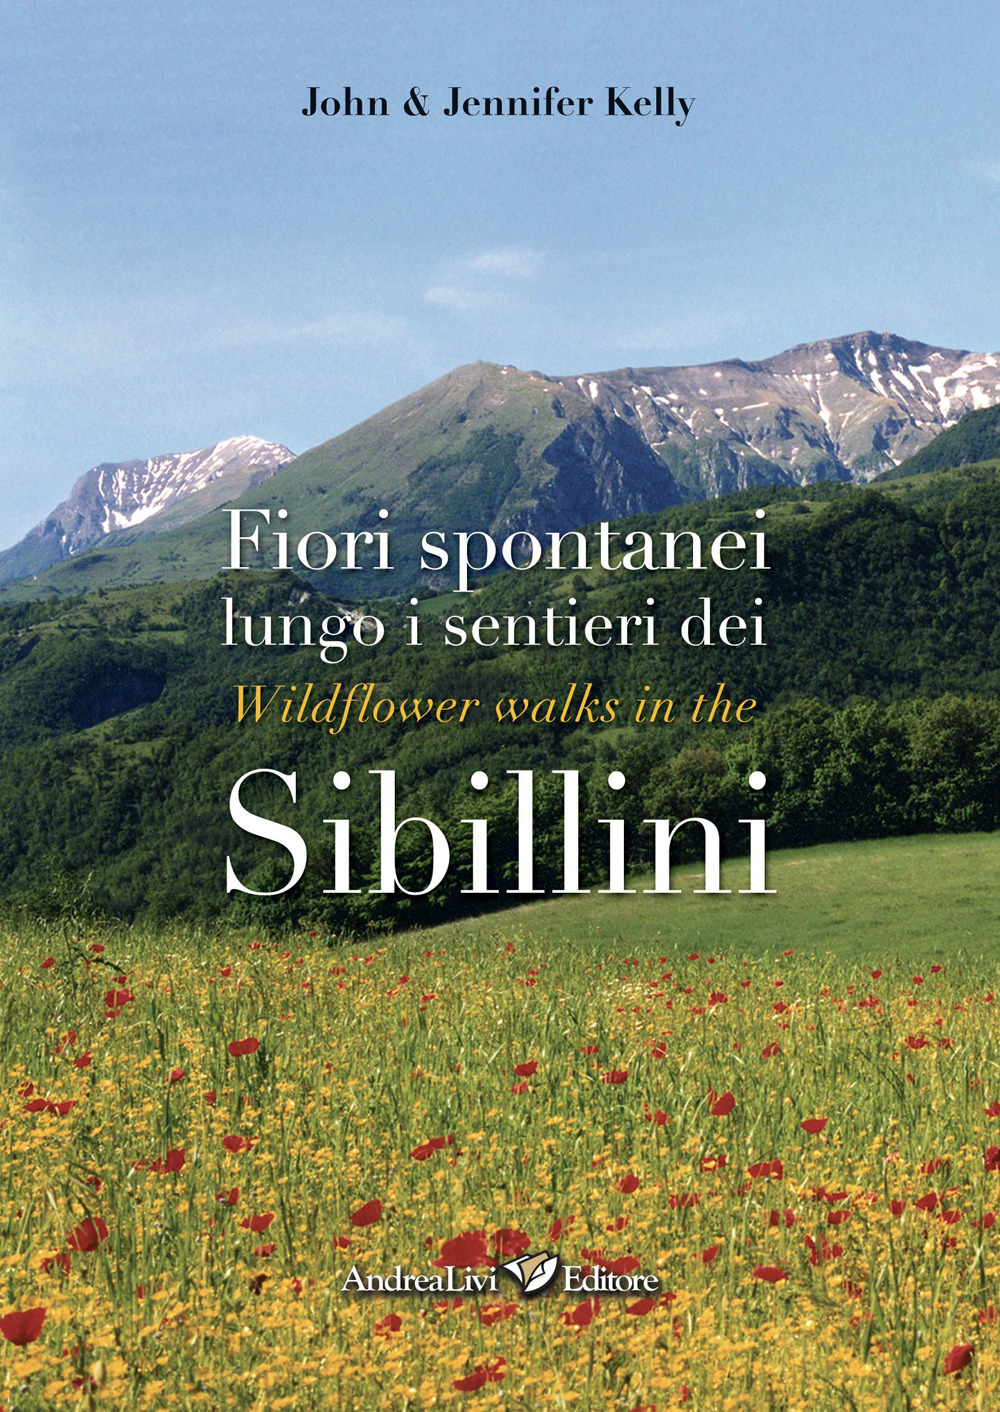 Fiori spontanei lungo i sentieri dei Sibillini-Wildflowers walks in the Sibillini. Ediz. illustrata